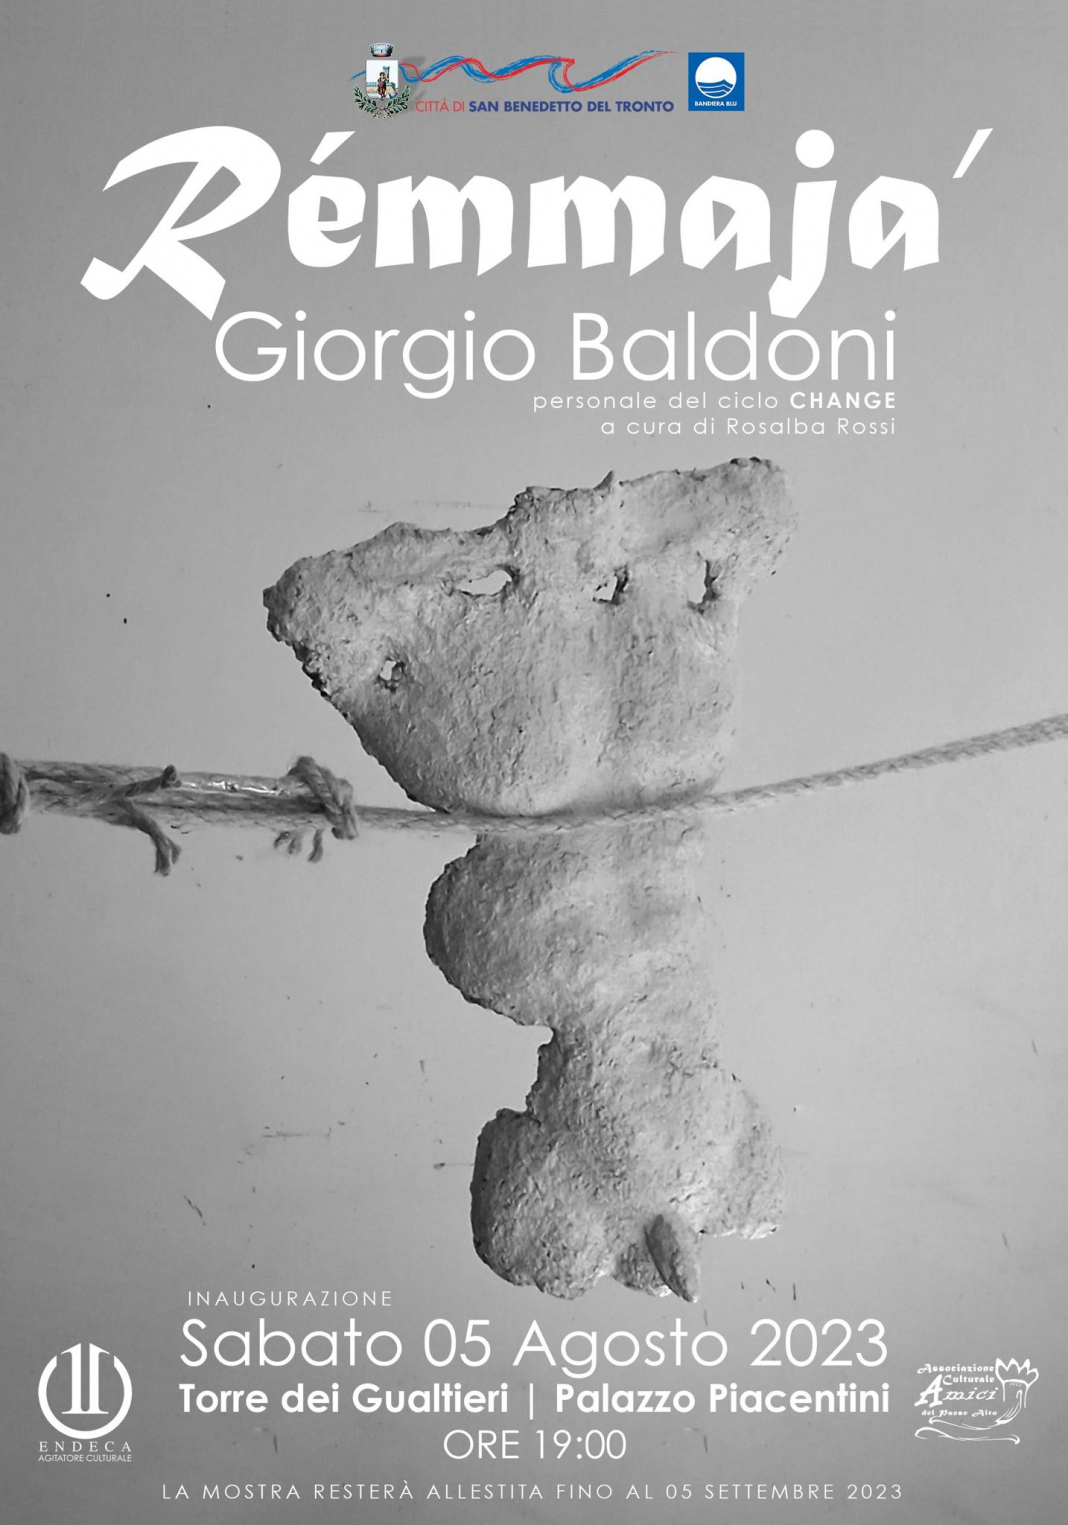 Giorgio Baldoni – Rémmaja’ – Changehttps://www.exibart.com/repository/media/formidable/11/img/256/Locandina-1068x1525.png